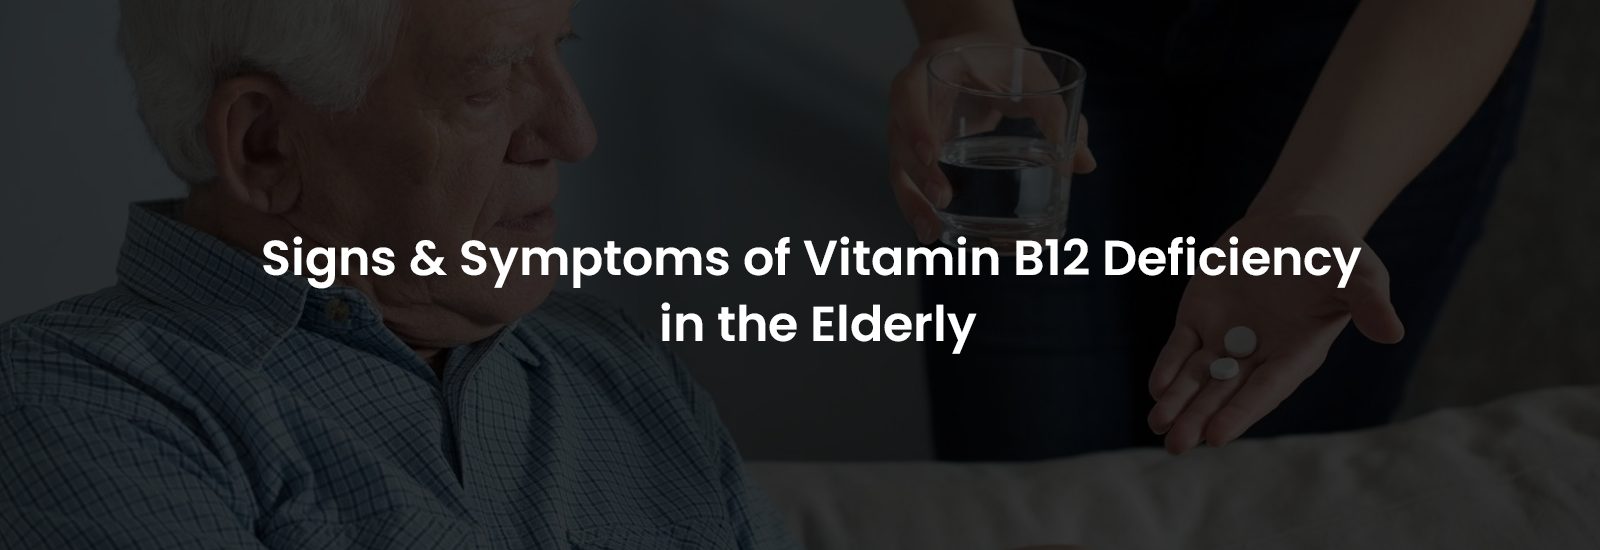 Signs & Symptoms of Vitamin B12 Deficiency in the Elderly | Banner Image